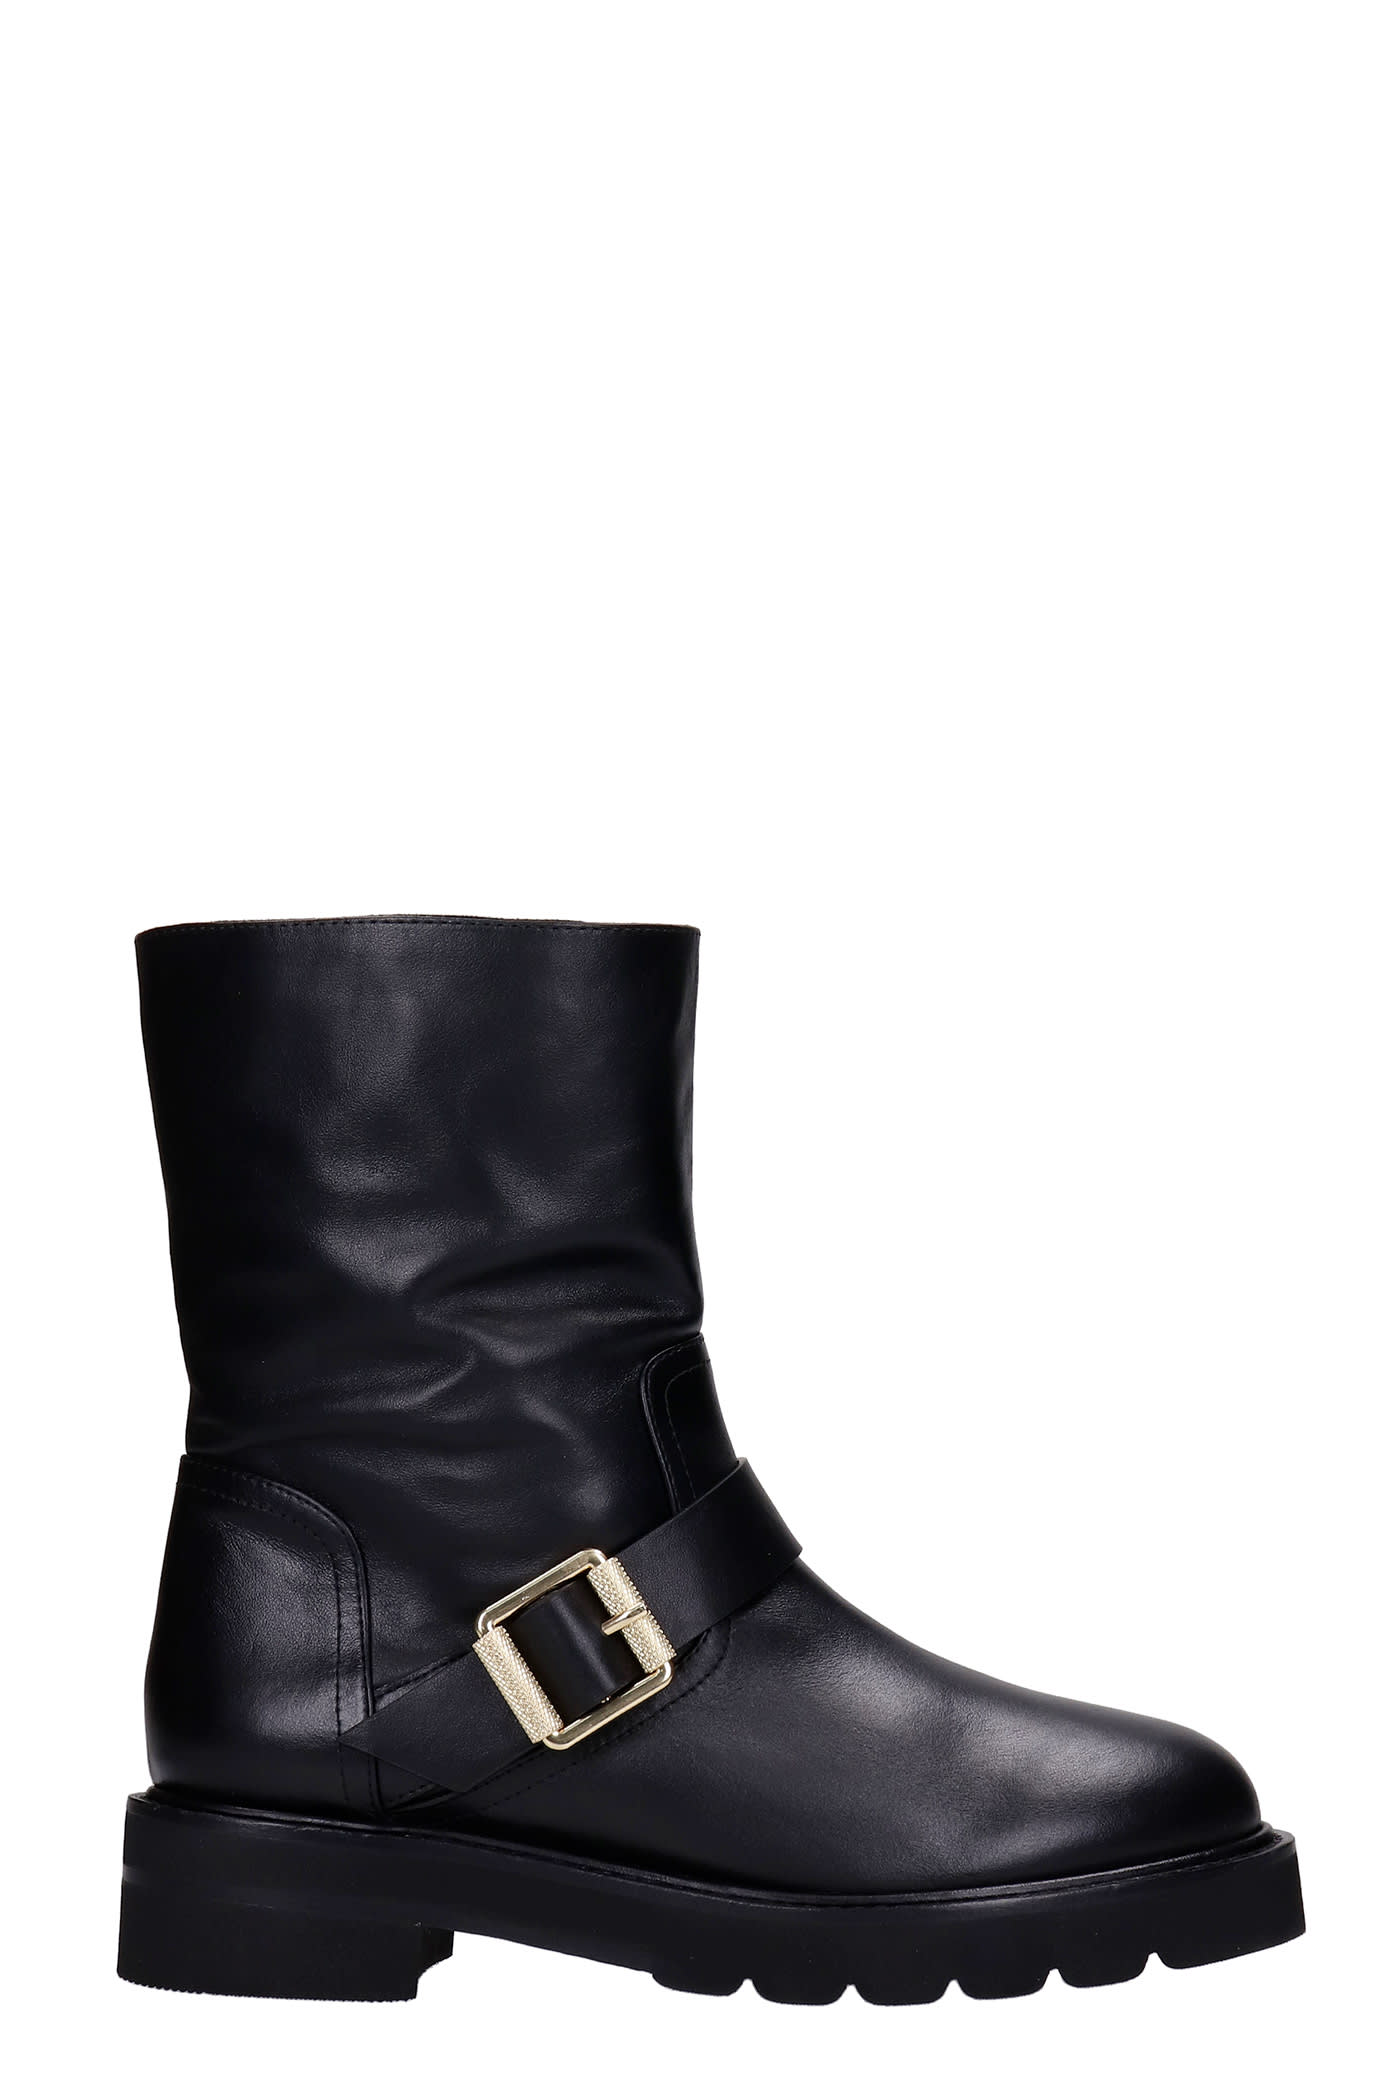 Stuart Weitzman Ryden Lift Combat Boots In Black Leather